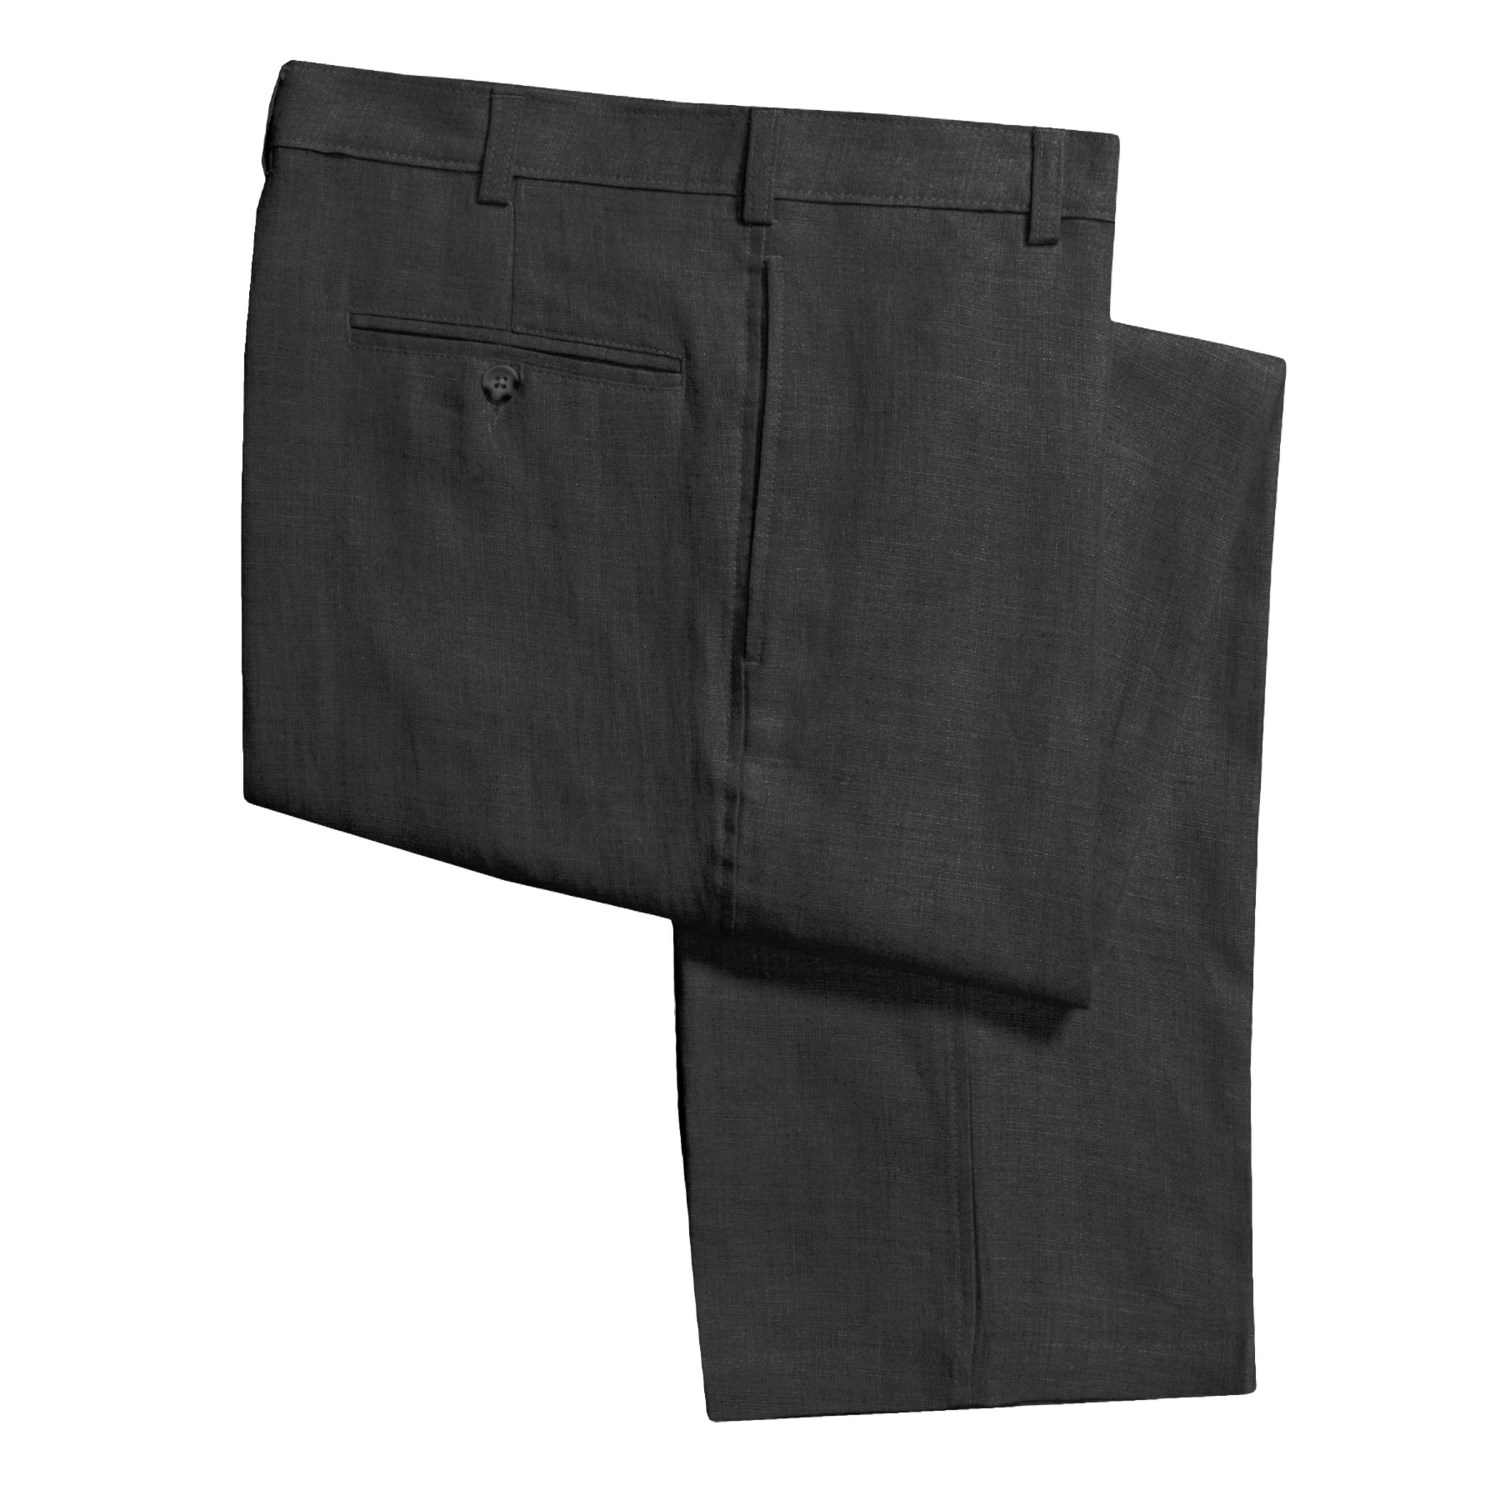 Berle Solid Linen Pants (For Men) 2506H - Save 90%